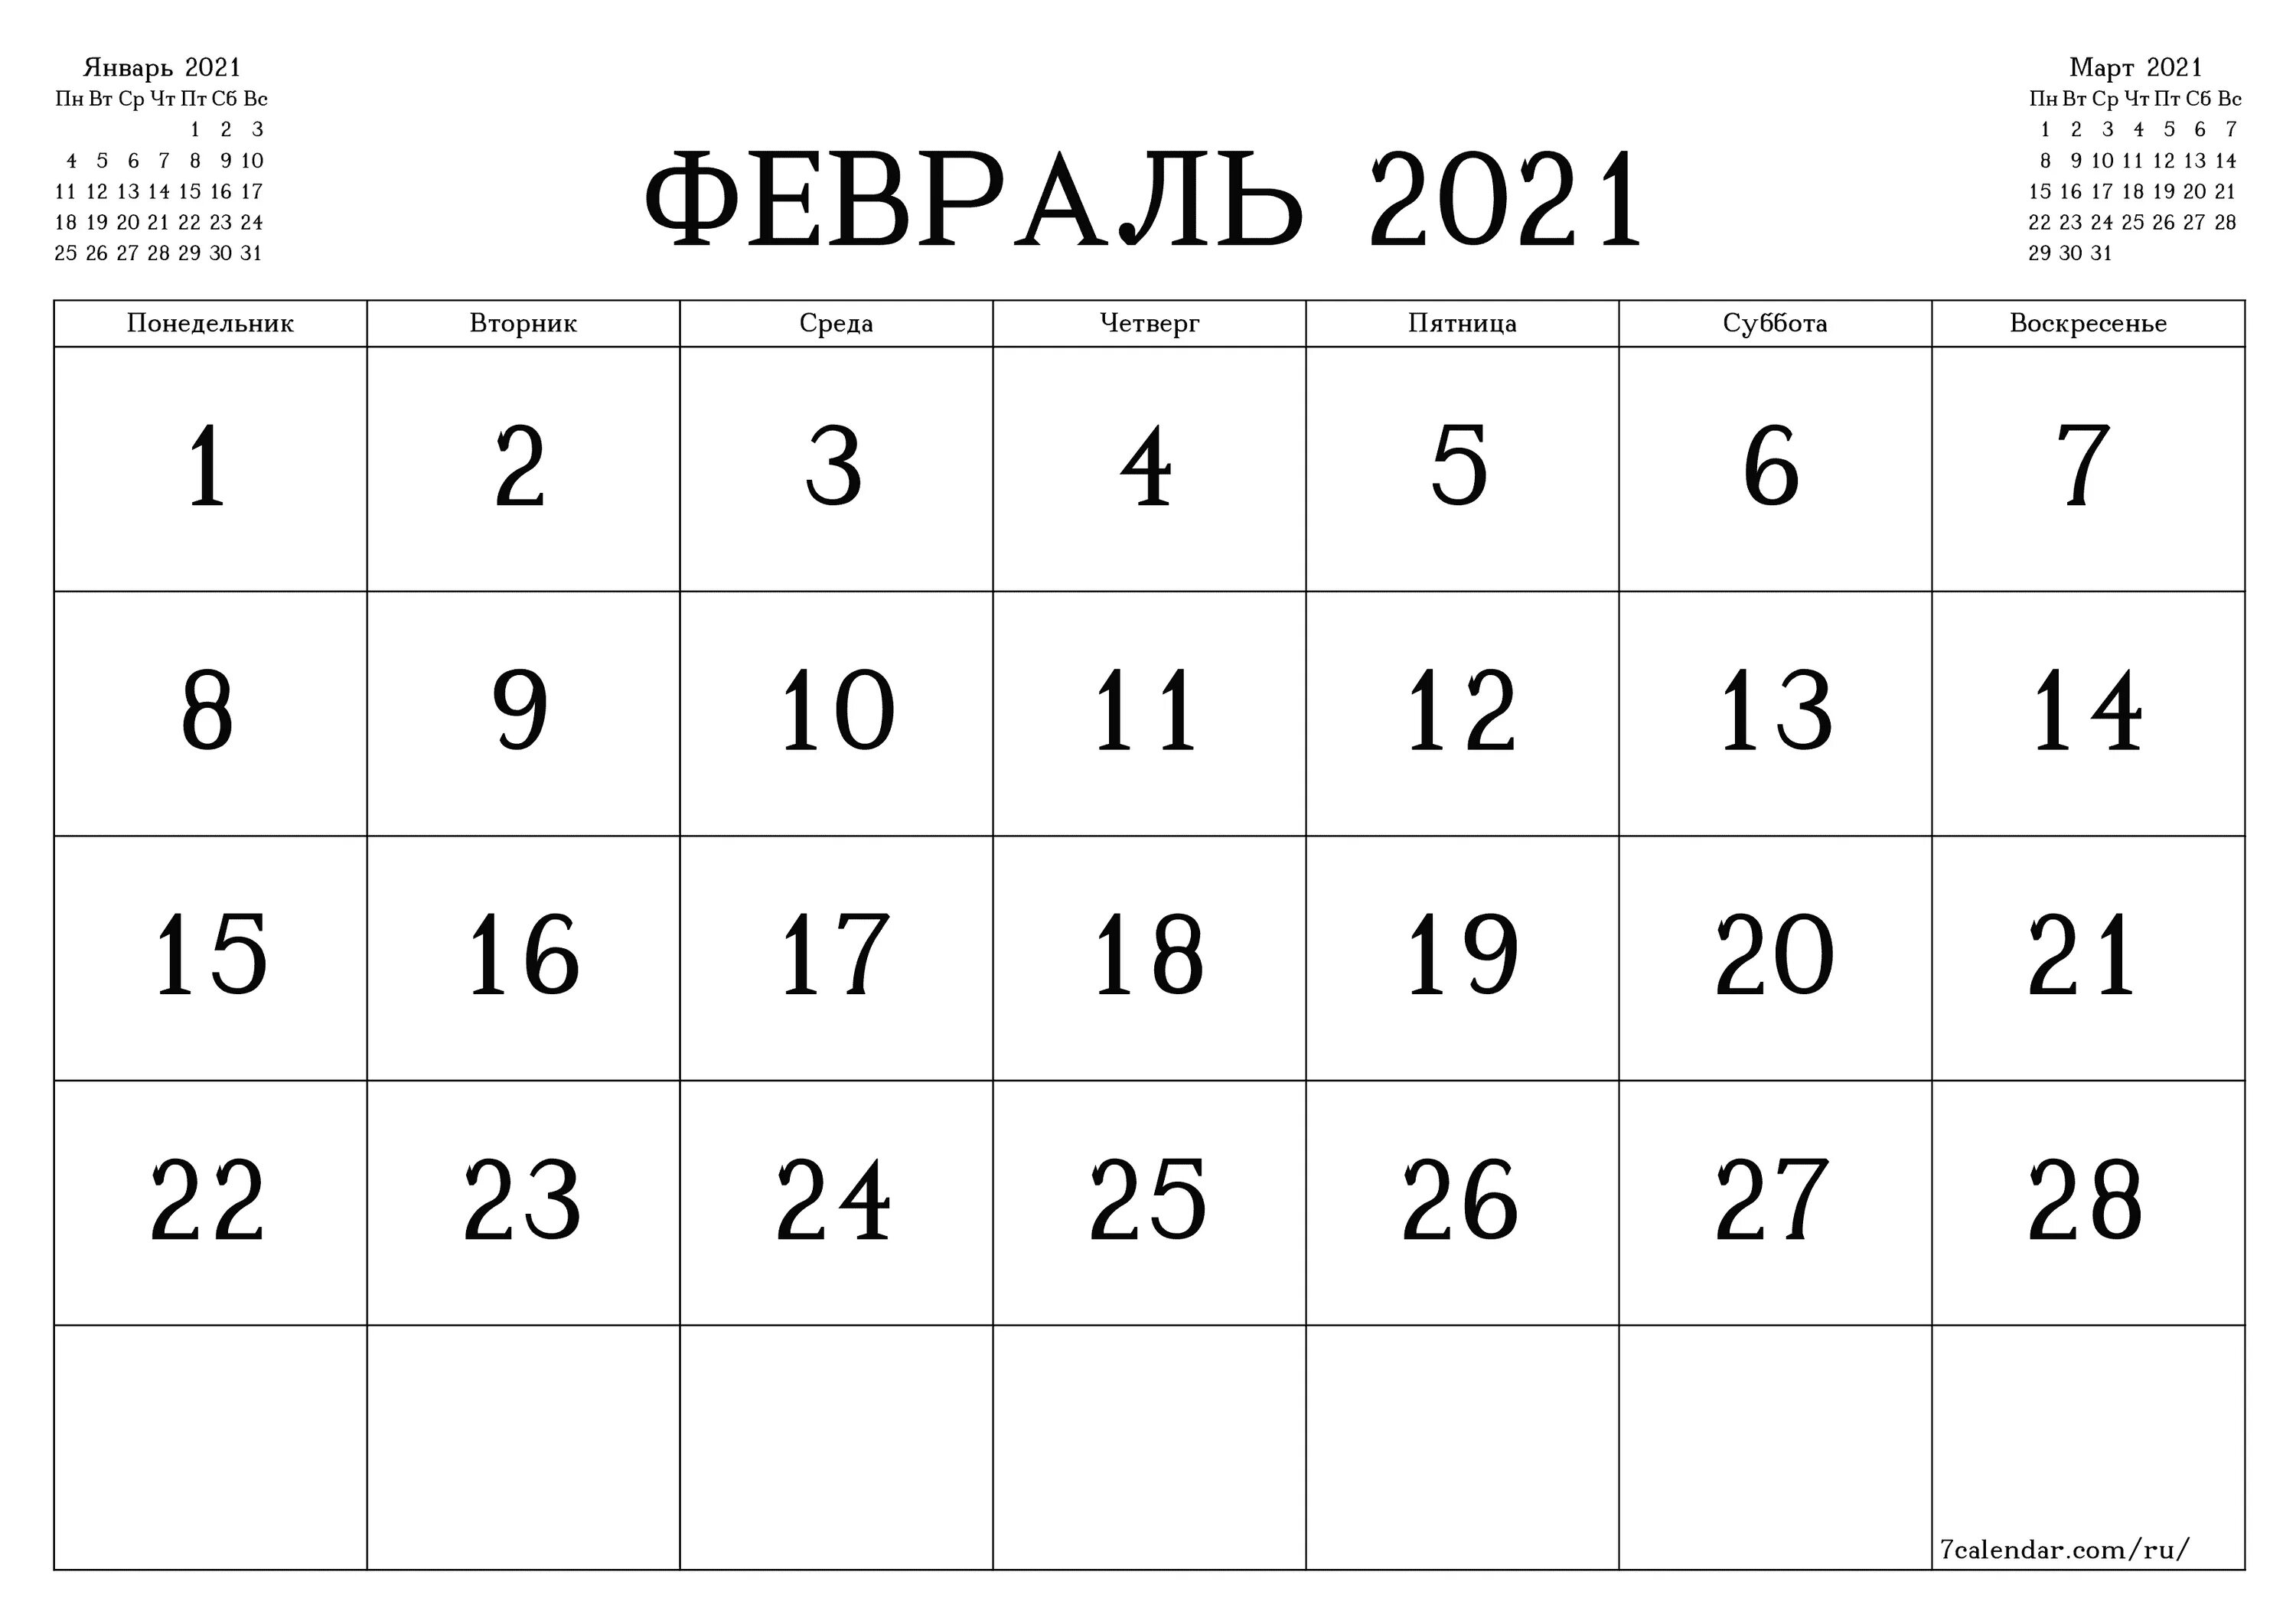 9 месяц календаря. Февраль 2021 года календарь. Календарь июль 2021г. Календарь на февраль месяц. Календарь на 2022 год февраль месяц.